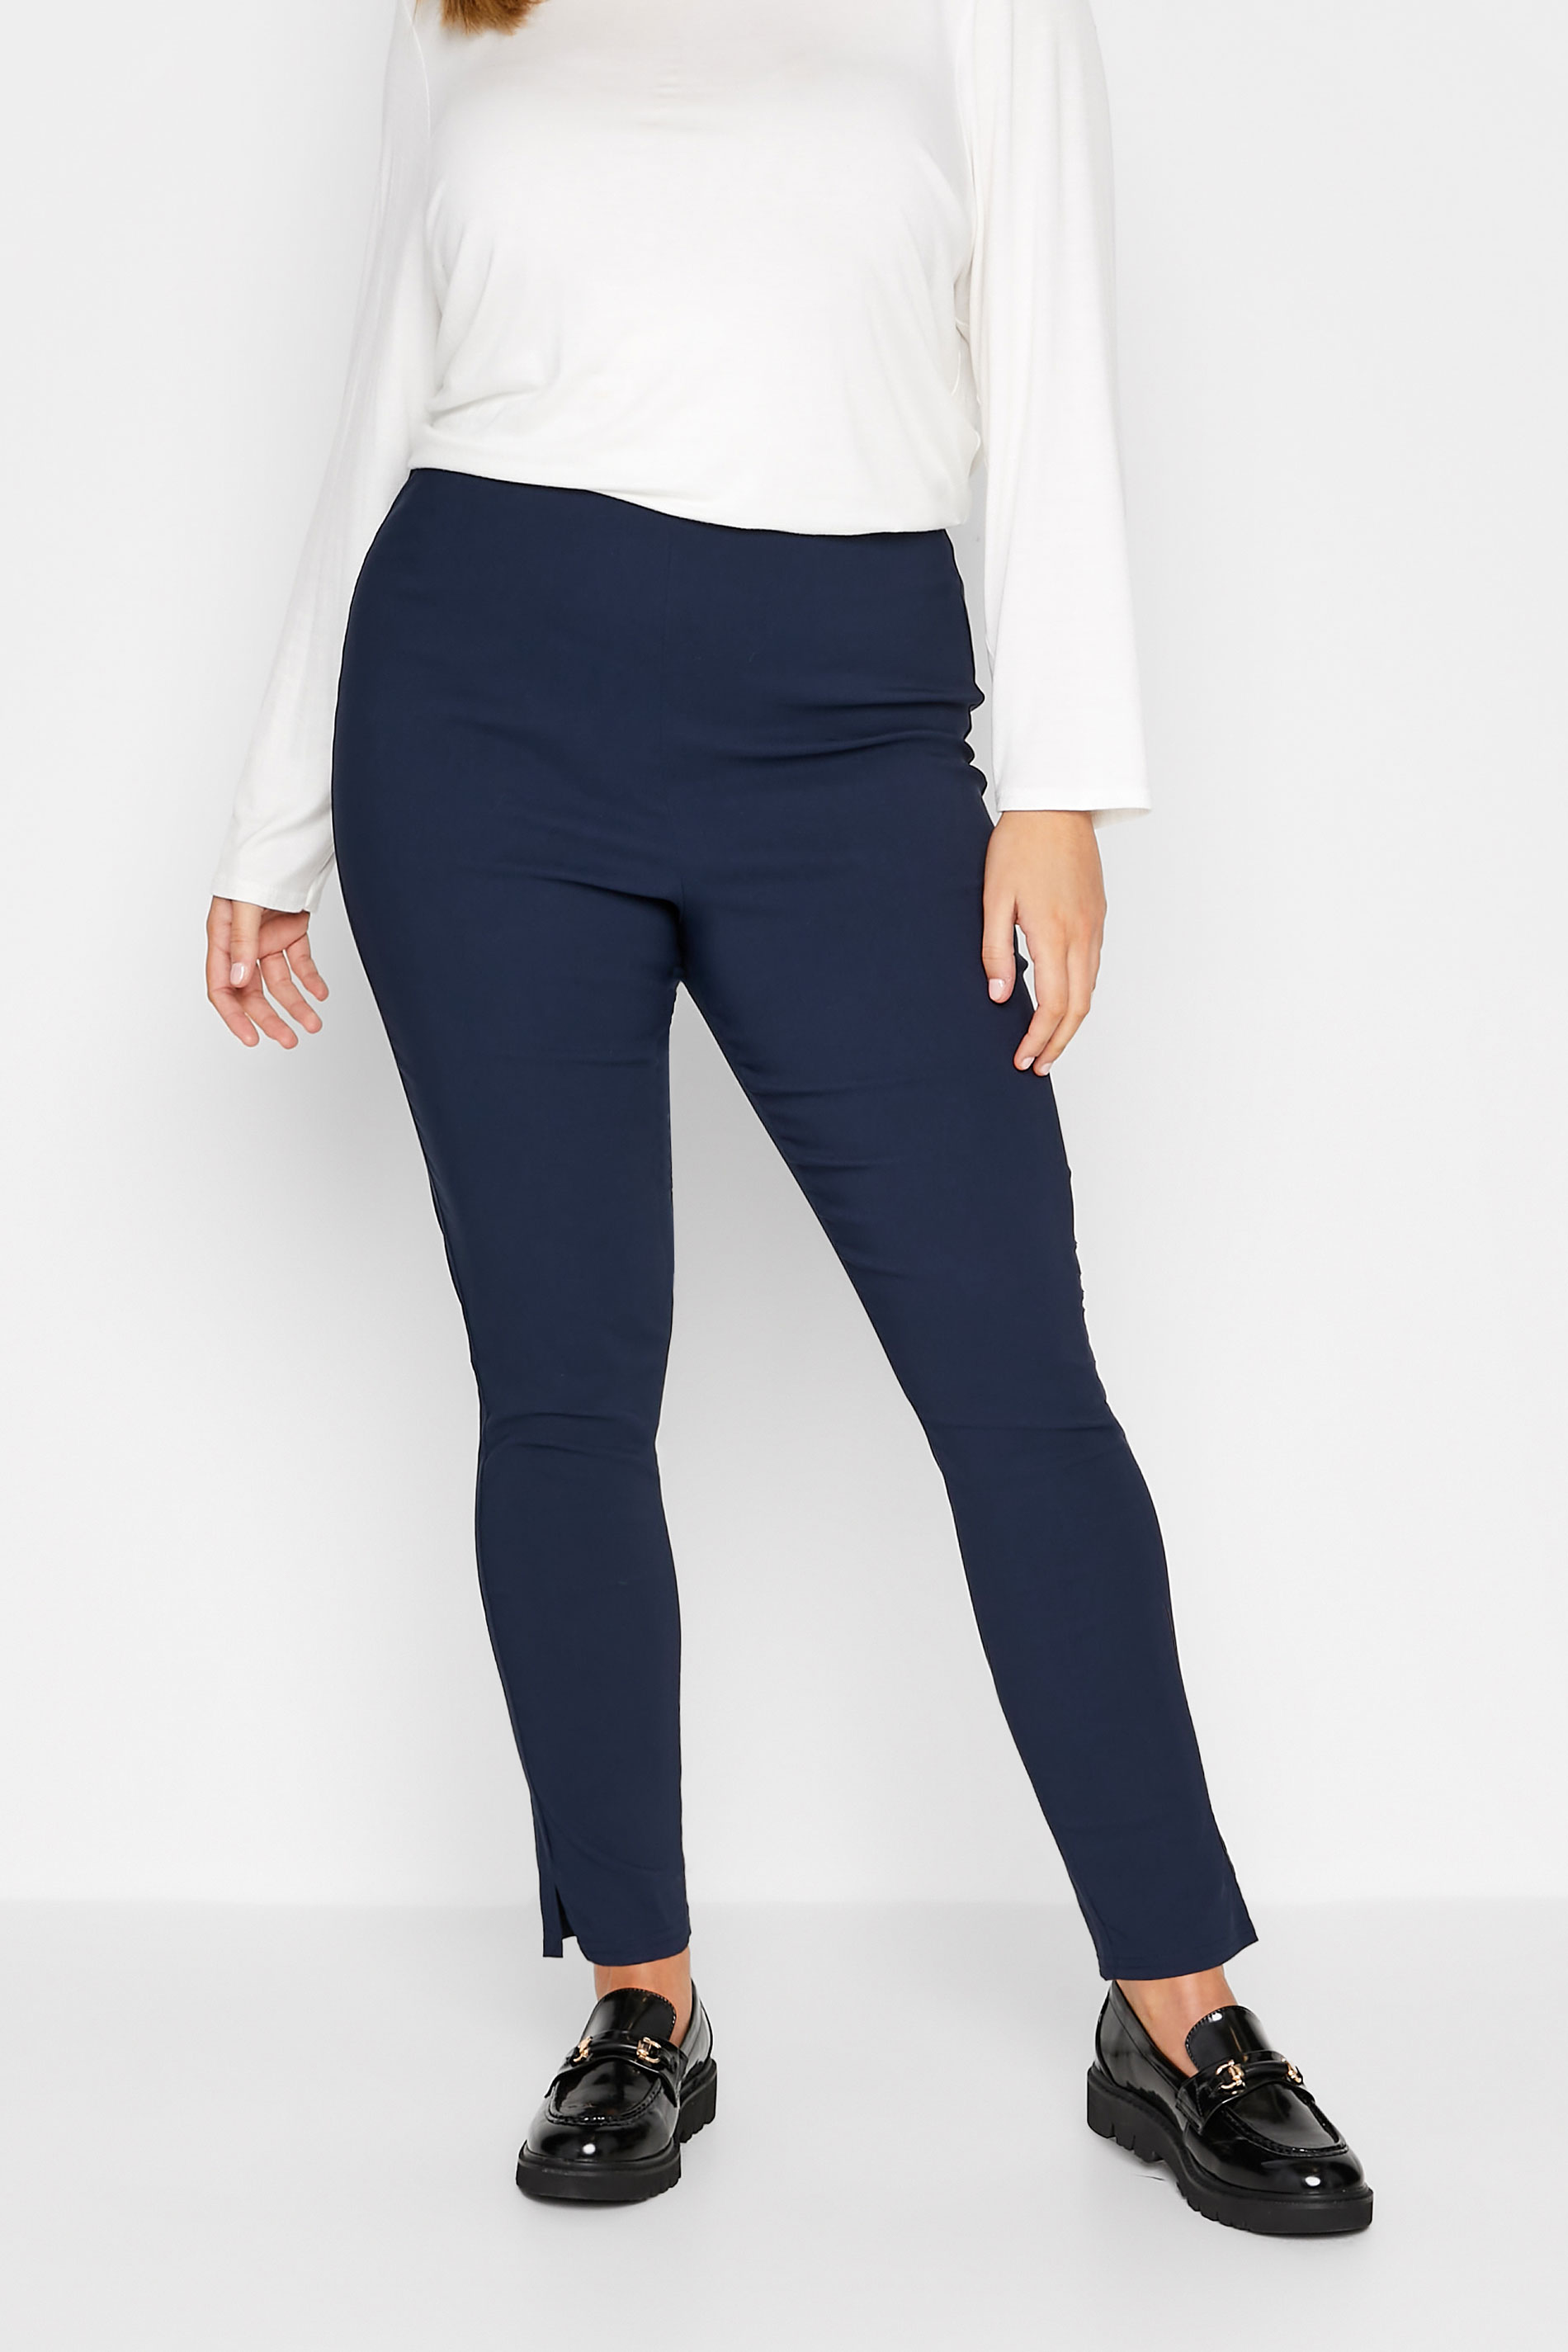 Buy Men Blue Solid Slim Fit Trousers Online  475392  Peter England